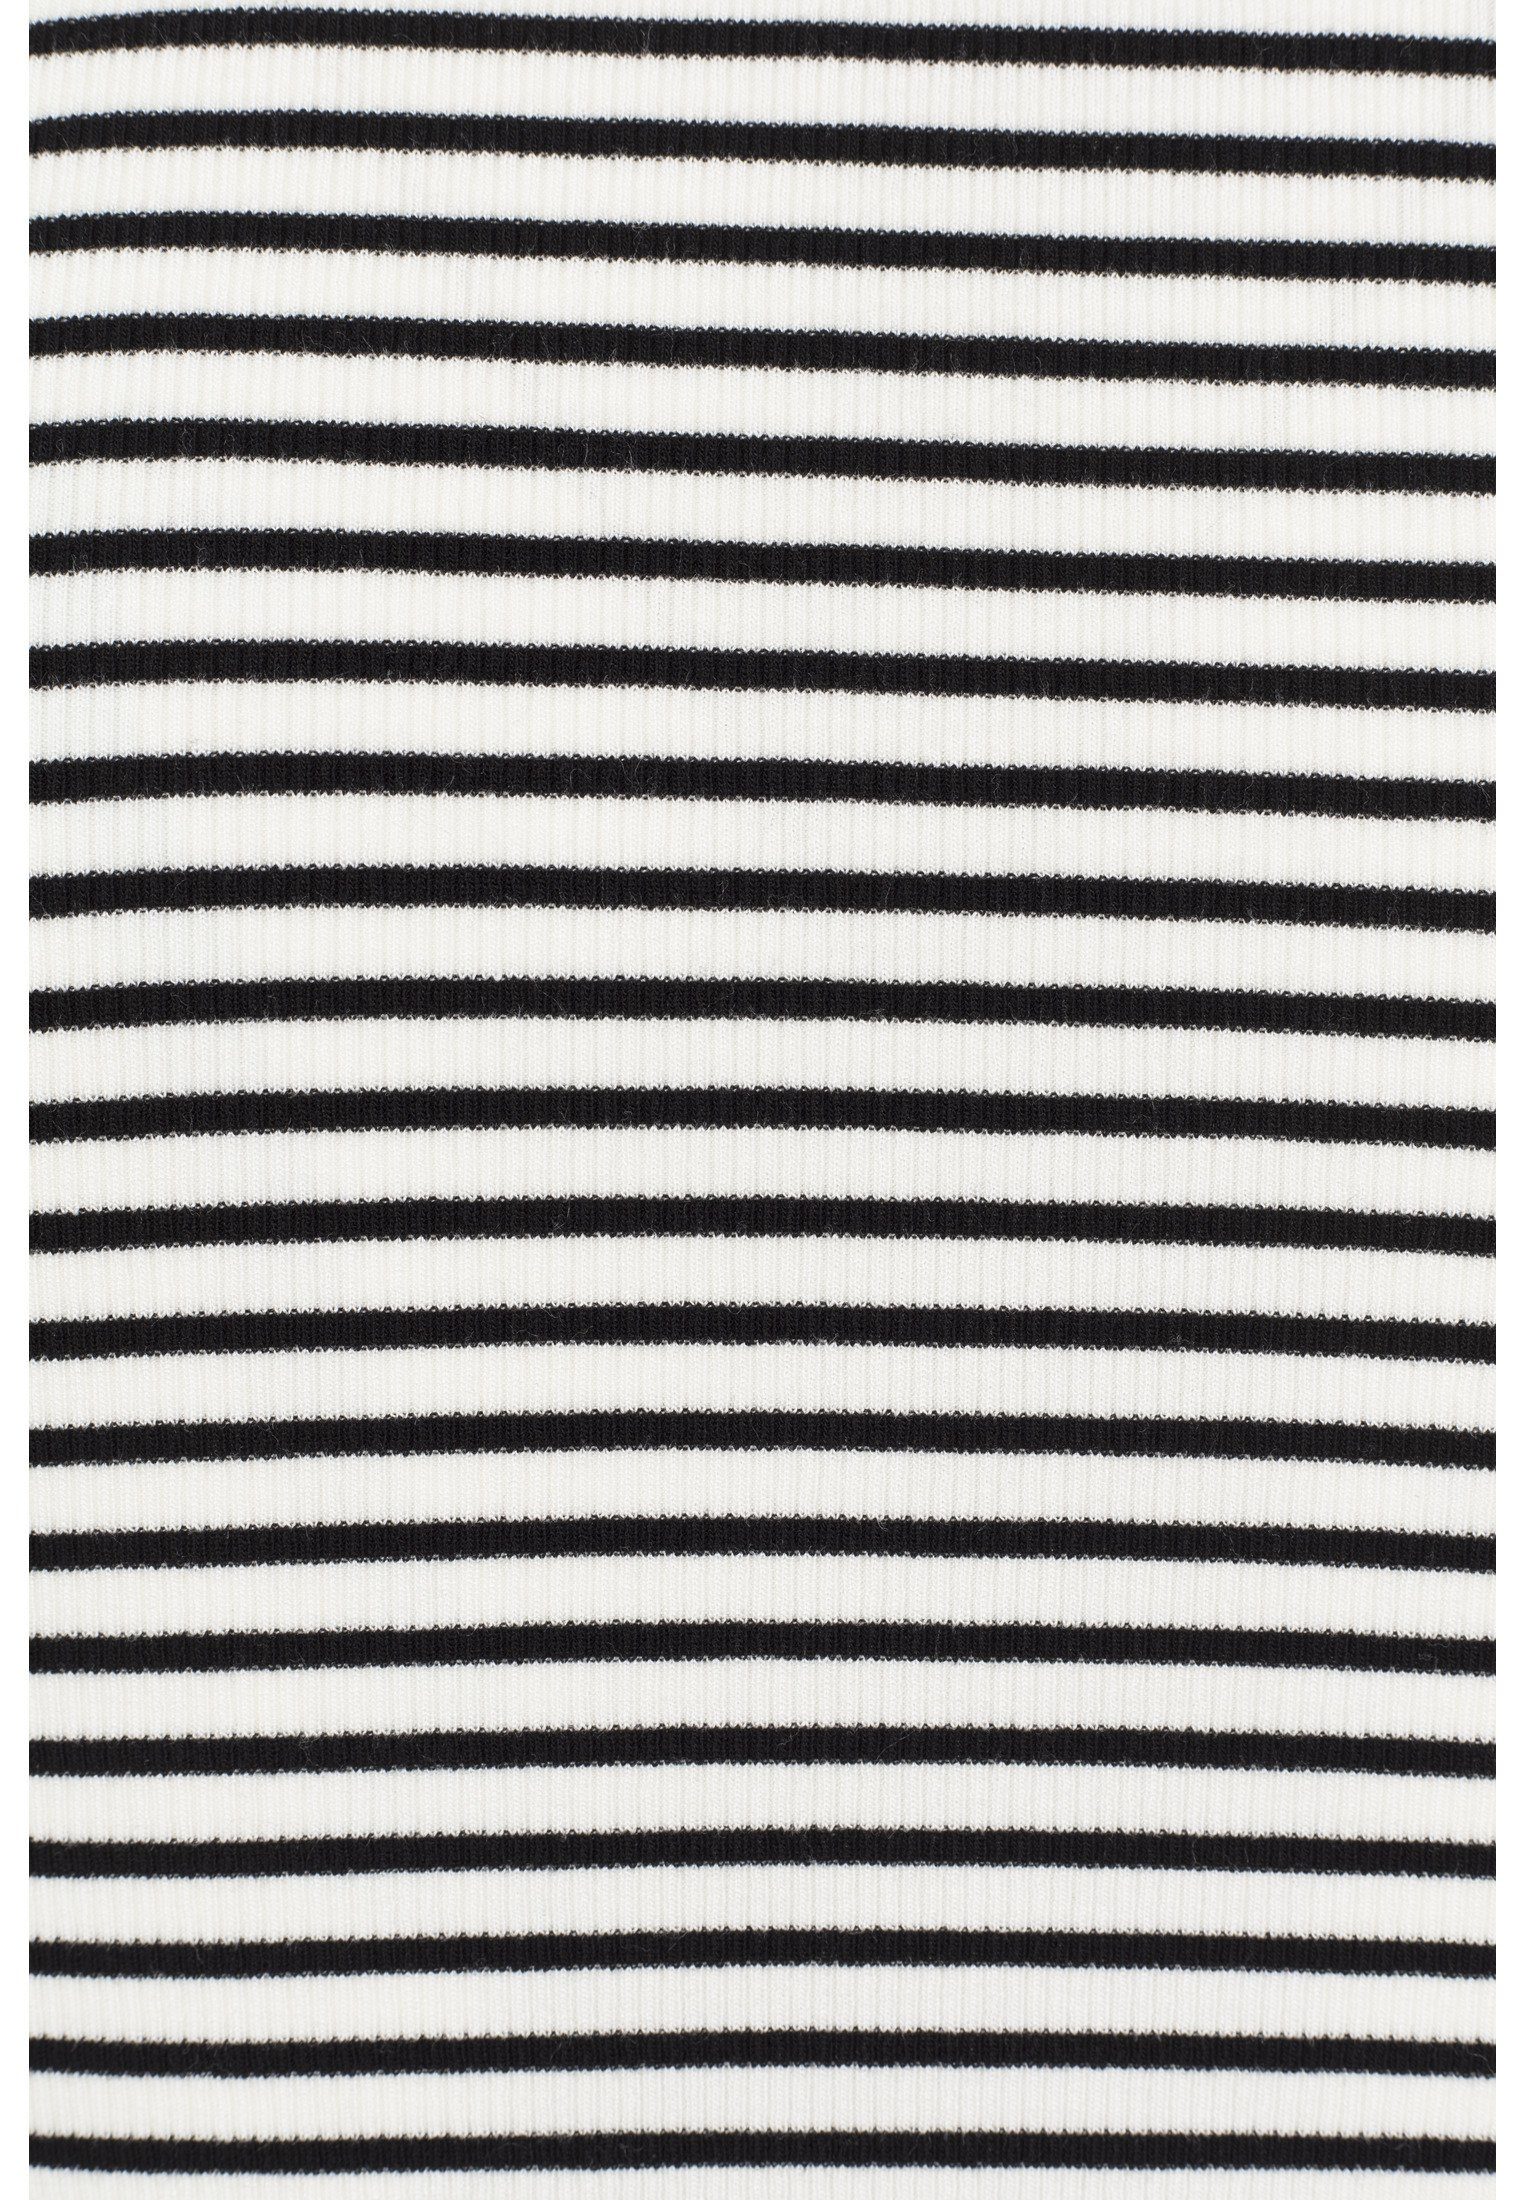 Ladies CLASSICS Turtleneck (1-tlg) Striped Jerseykleid Damen Dress URBAN